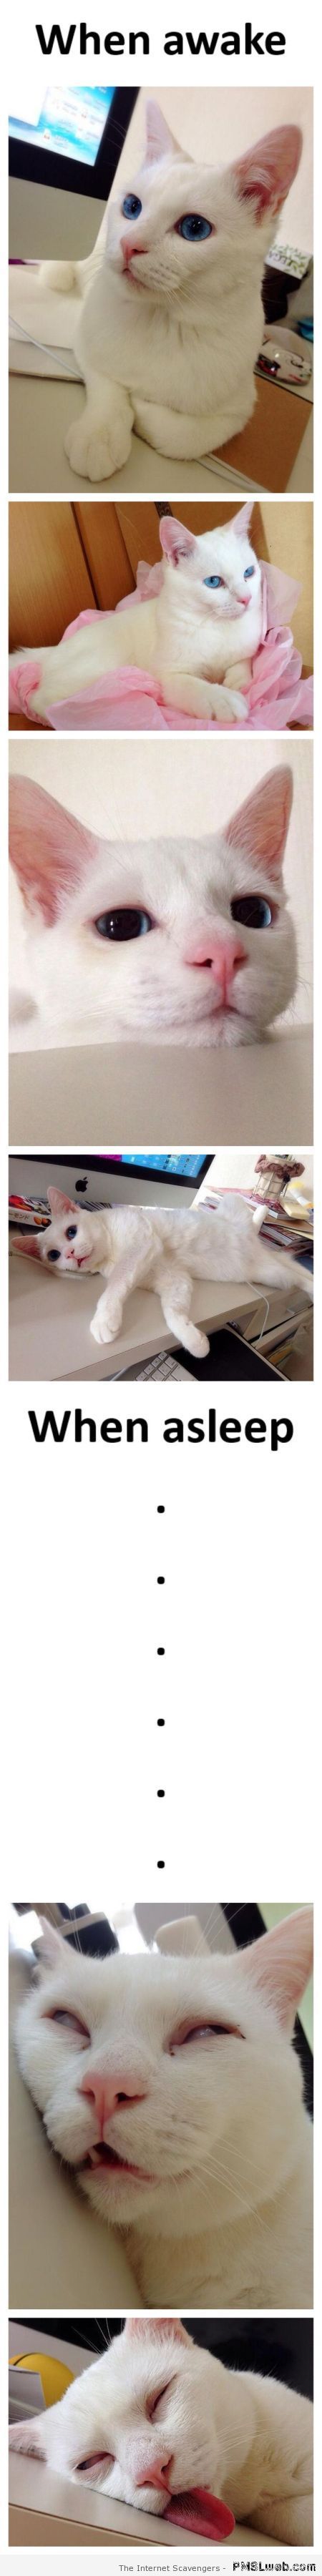 When I’m asleep cat humor at PMSLweb.com